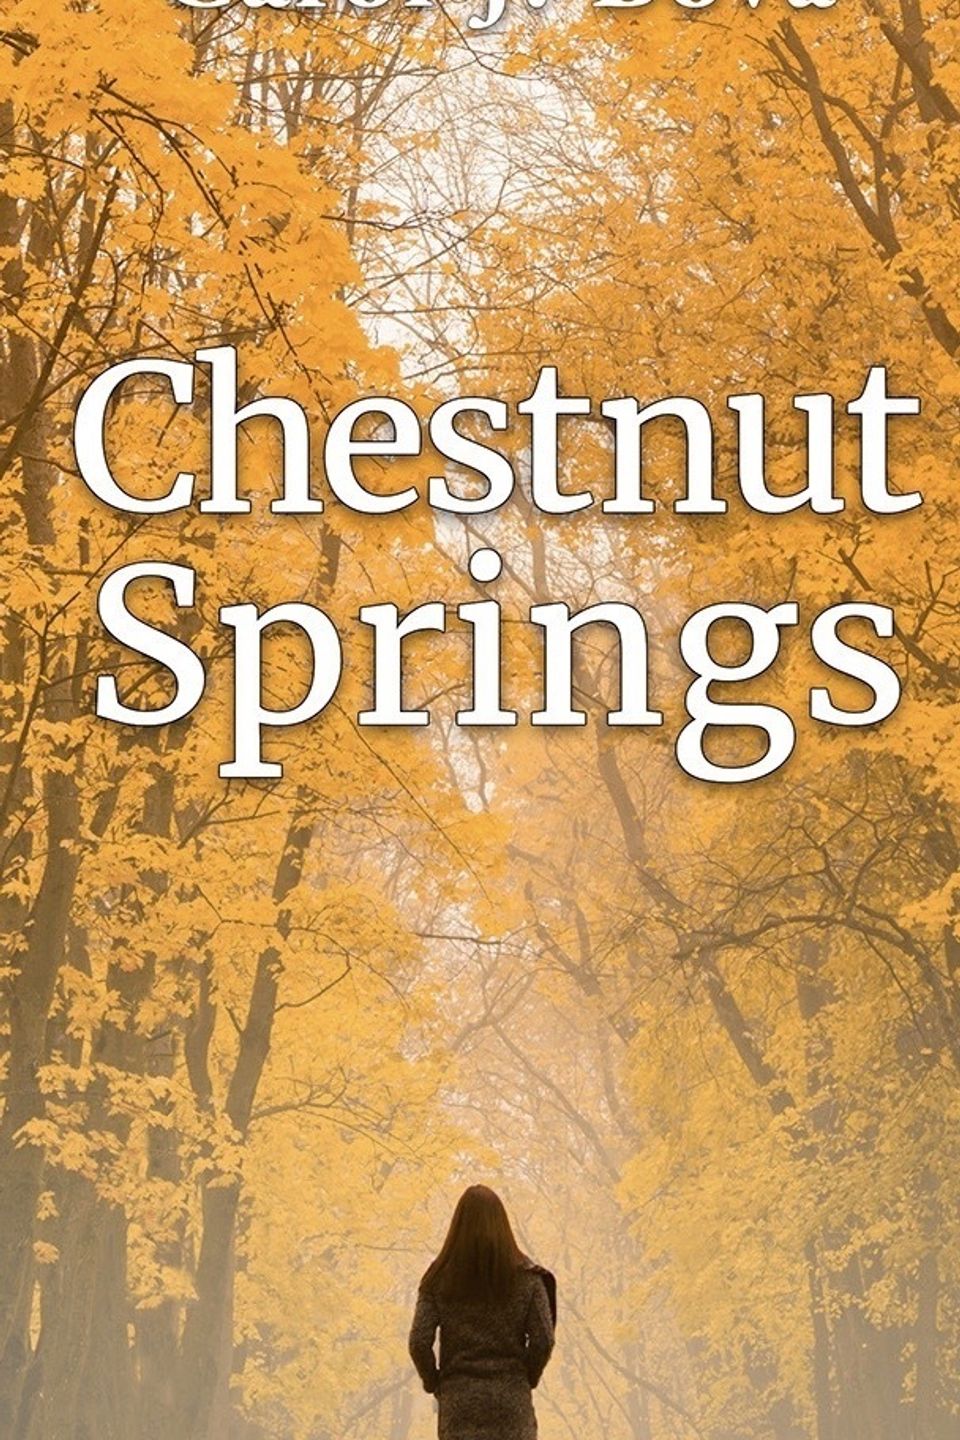 Chestnutsprings fullcover2b web20170910 9243 1cdswd3